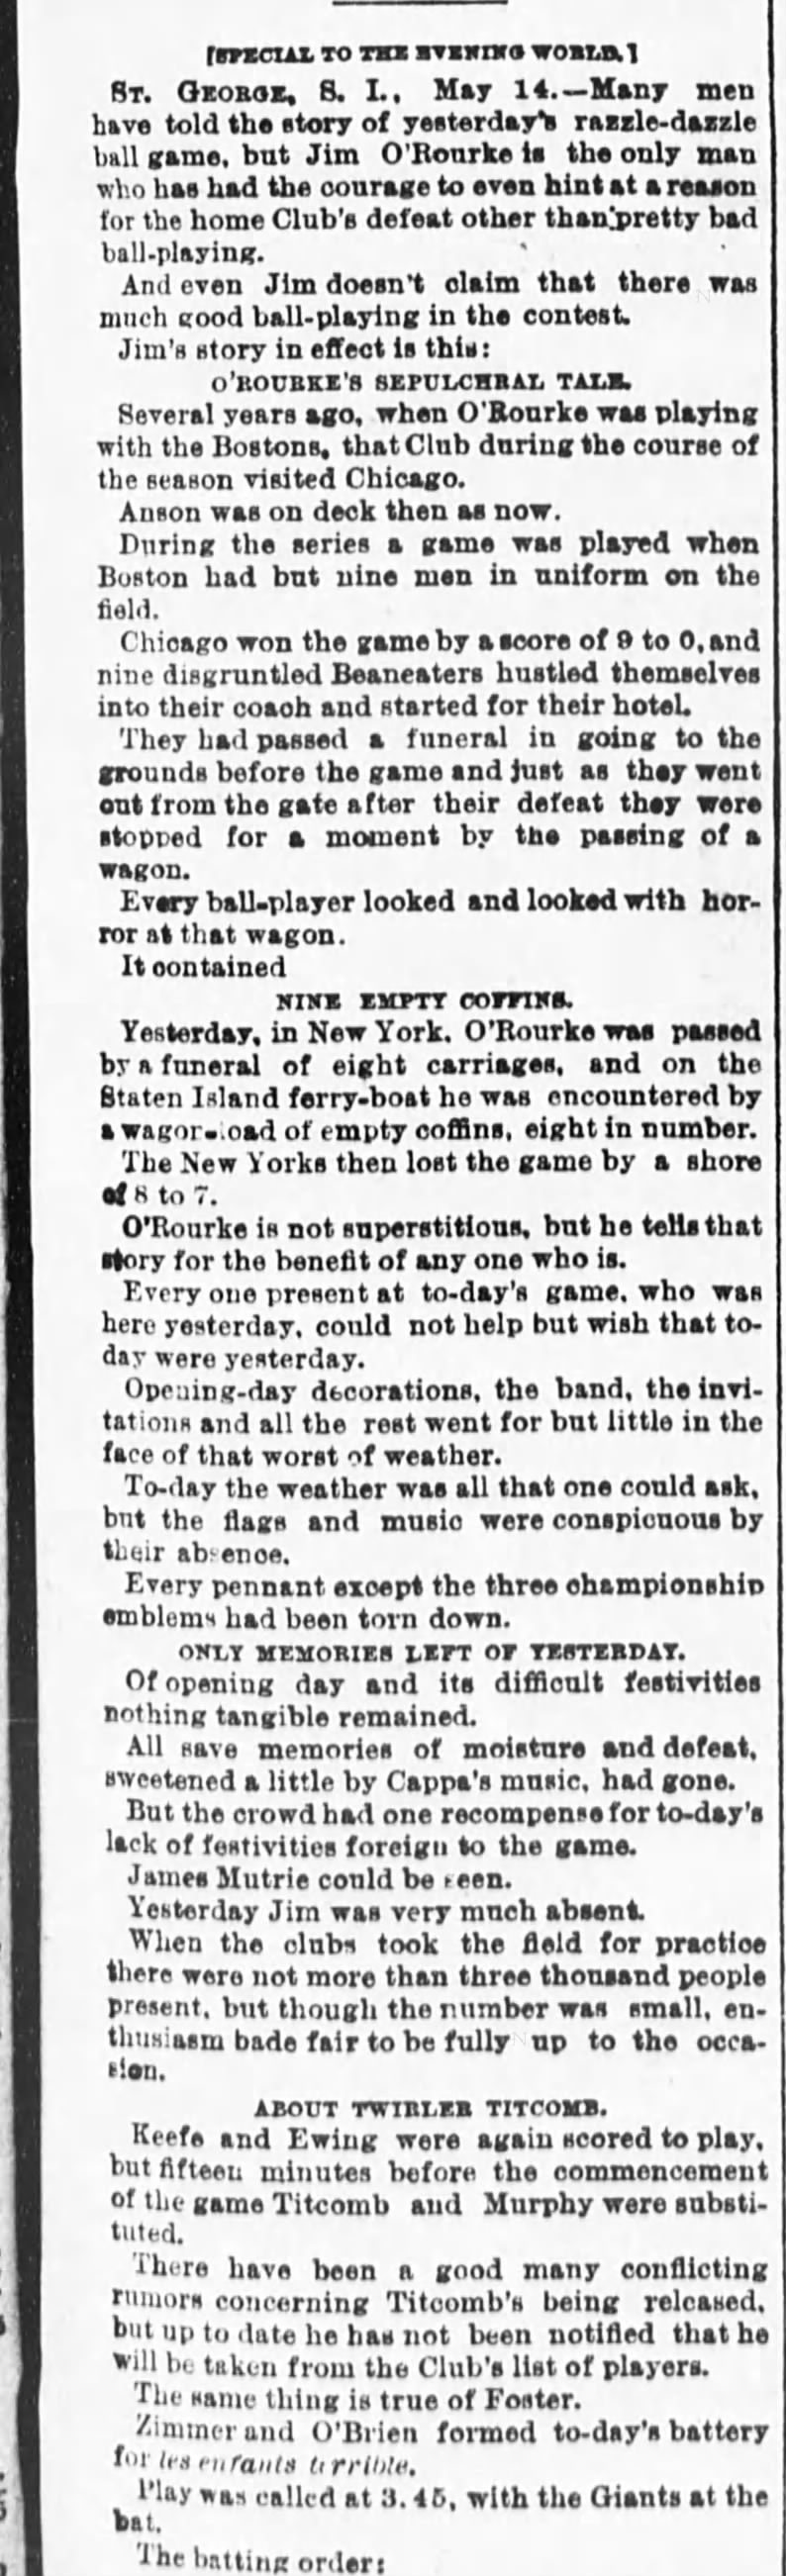 The Evening World (New York New York) May 14 1889